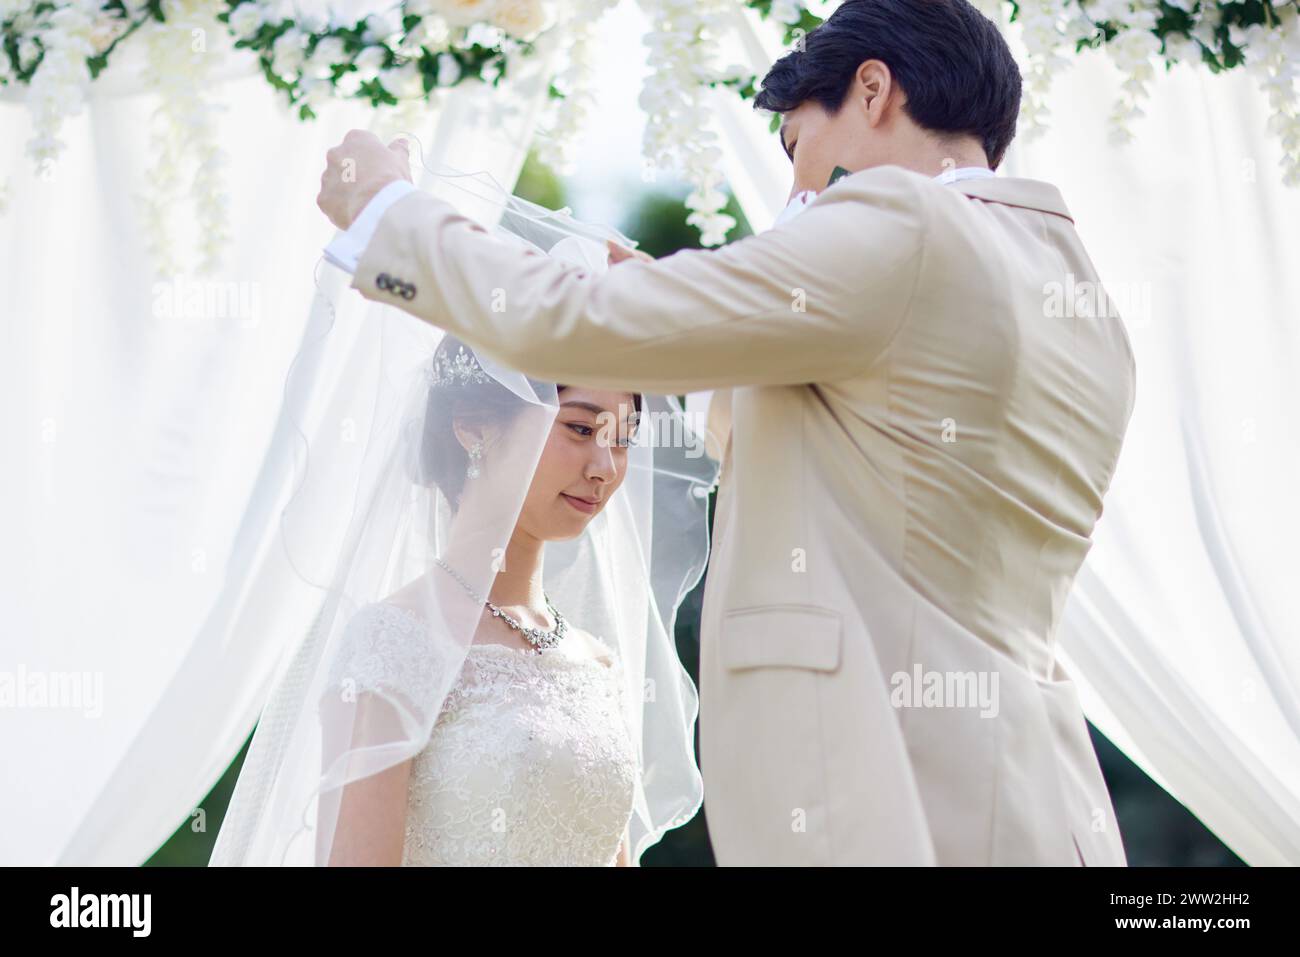 Groom lifting bride veil at wedding Stock Photo